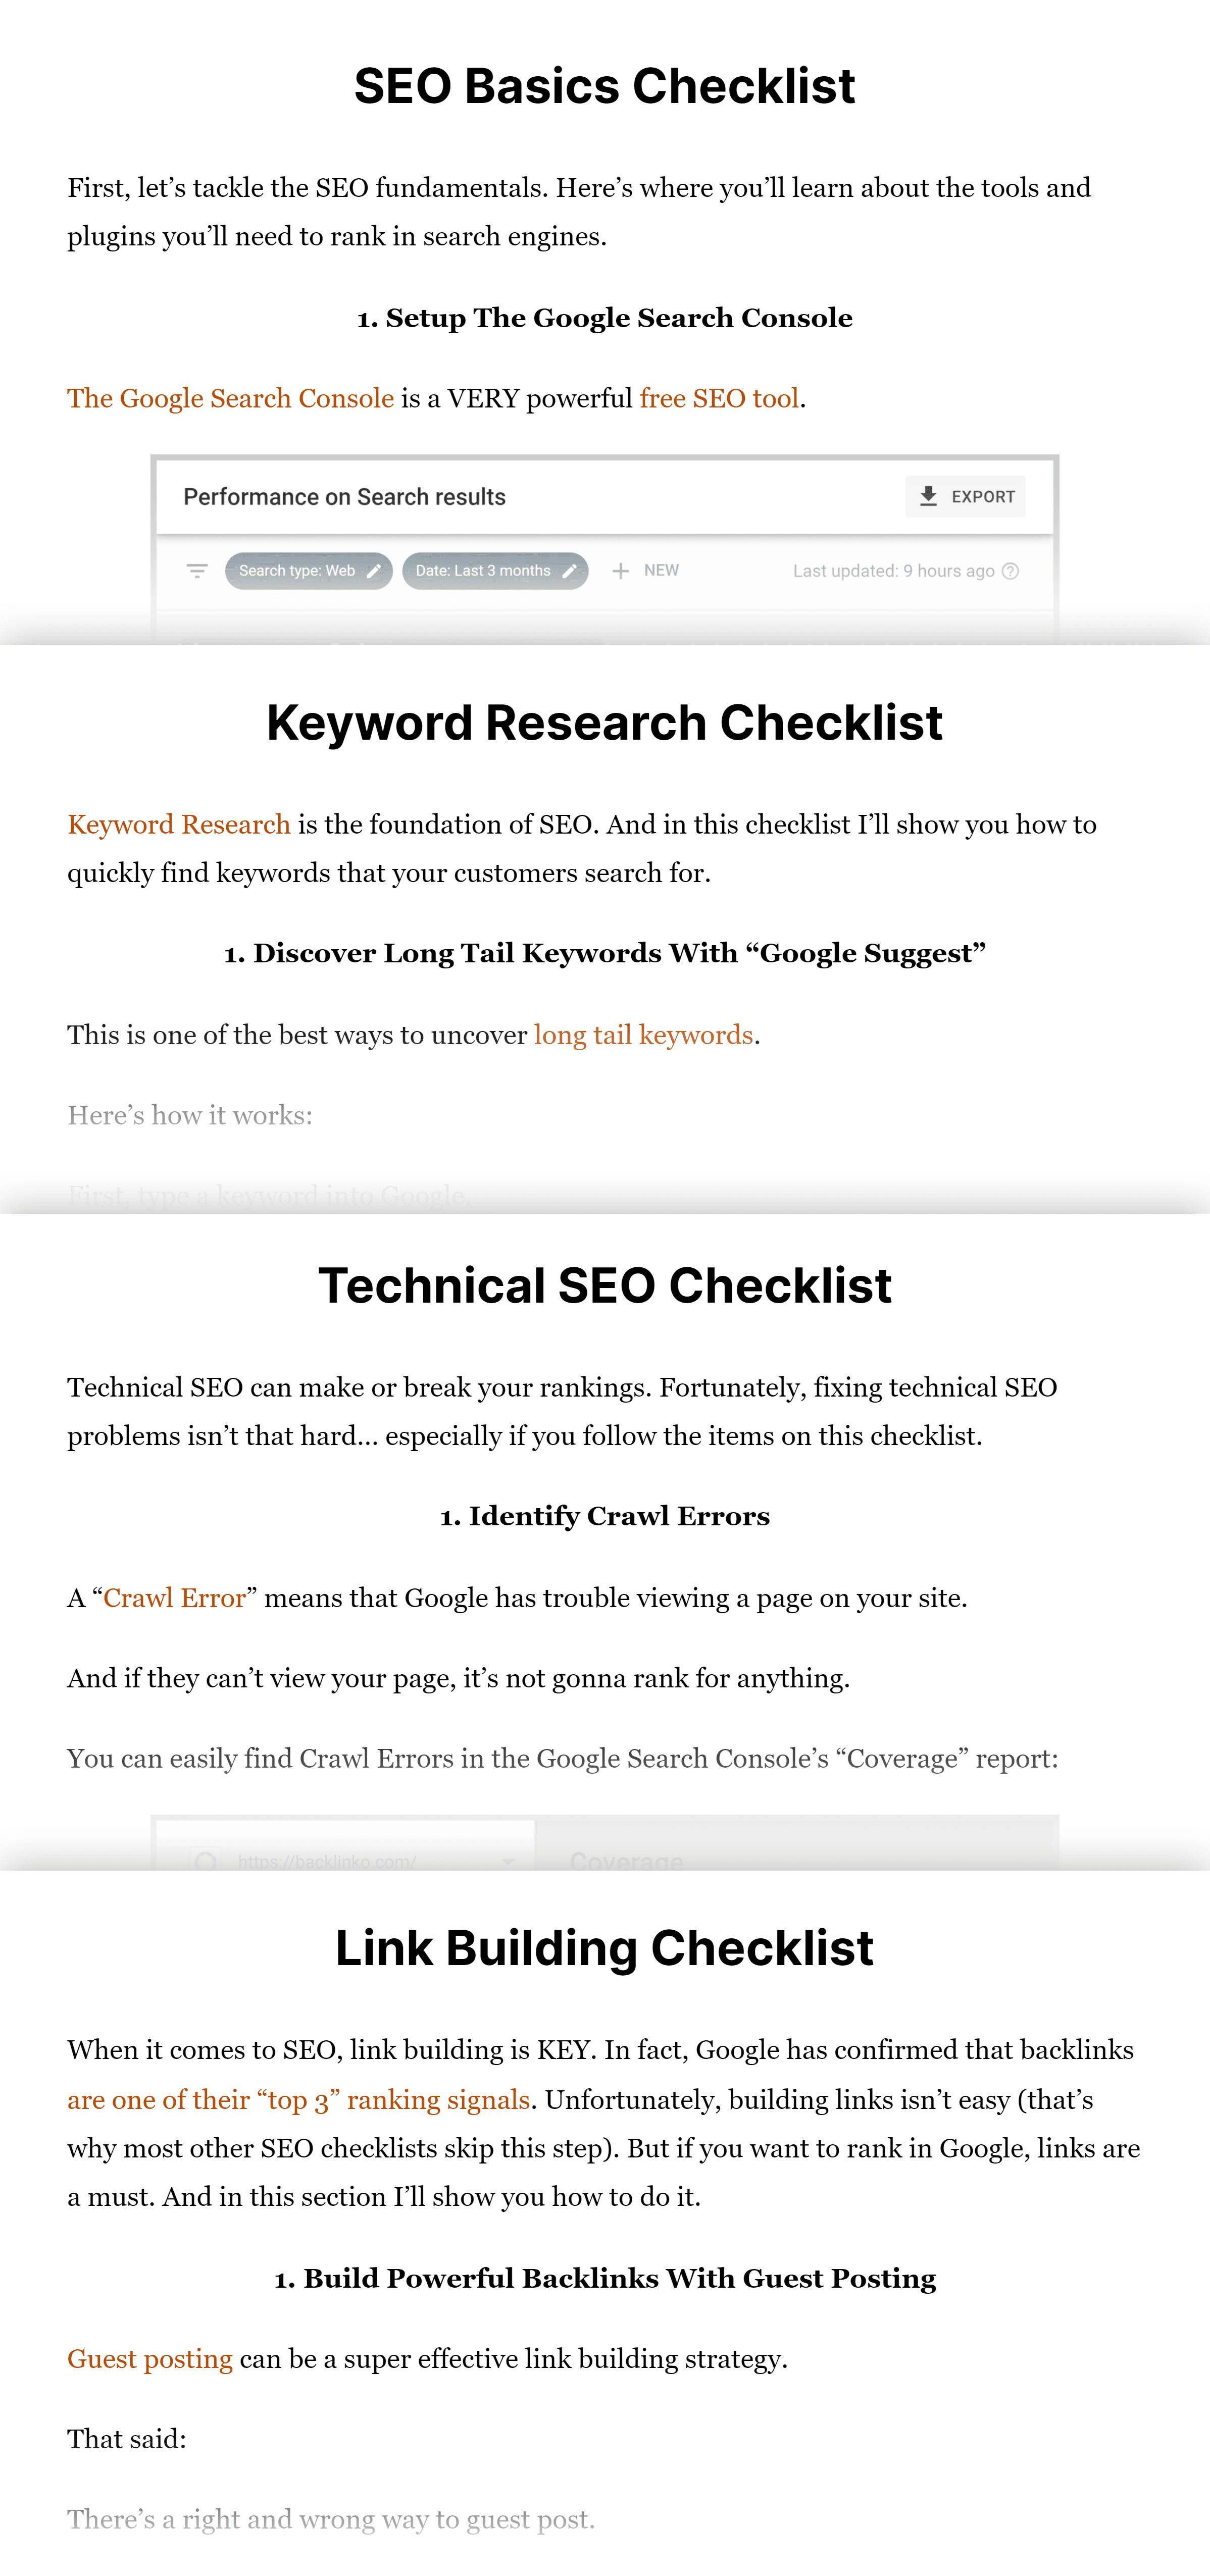 SEO checklist – Subtopics